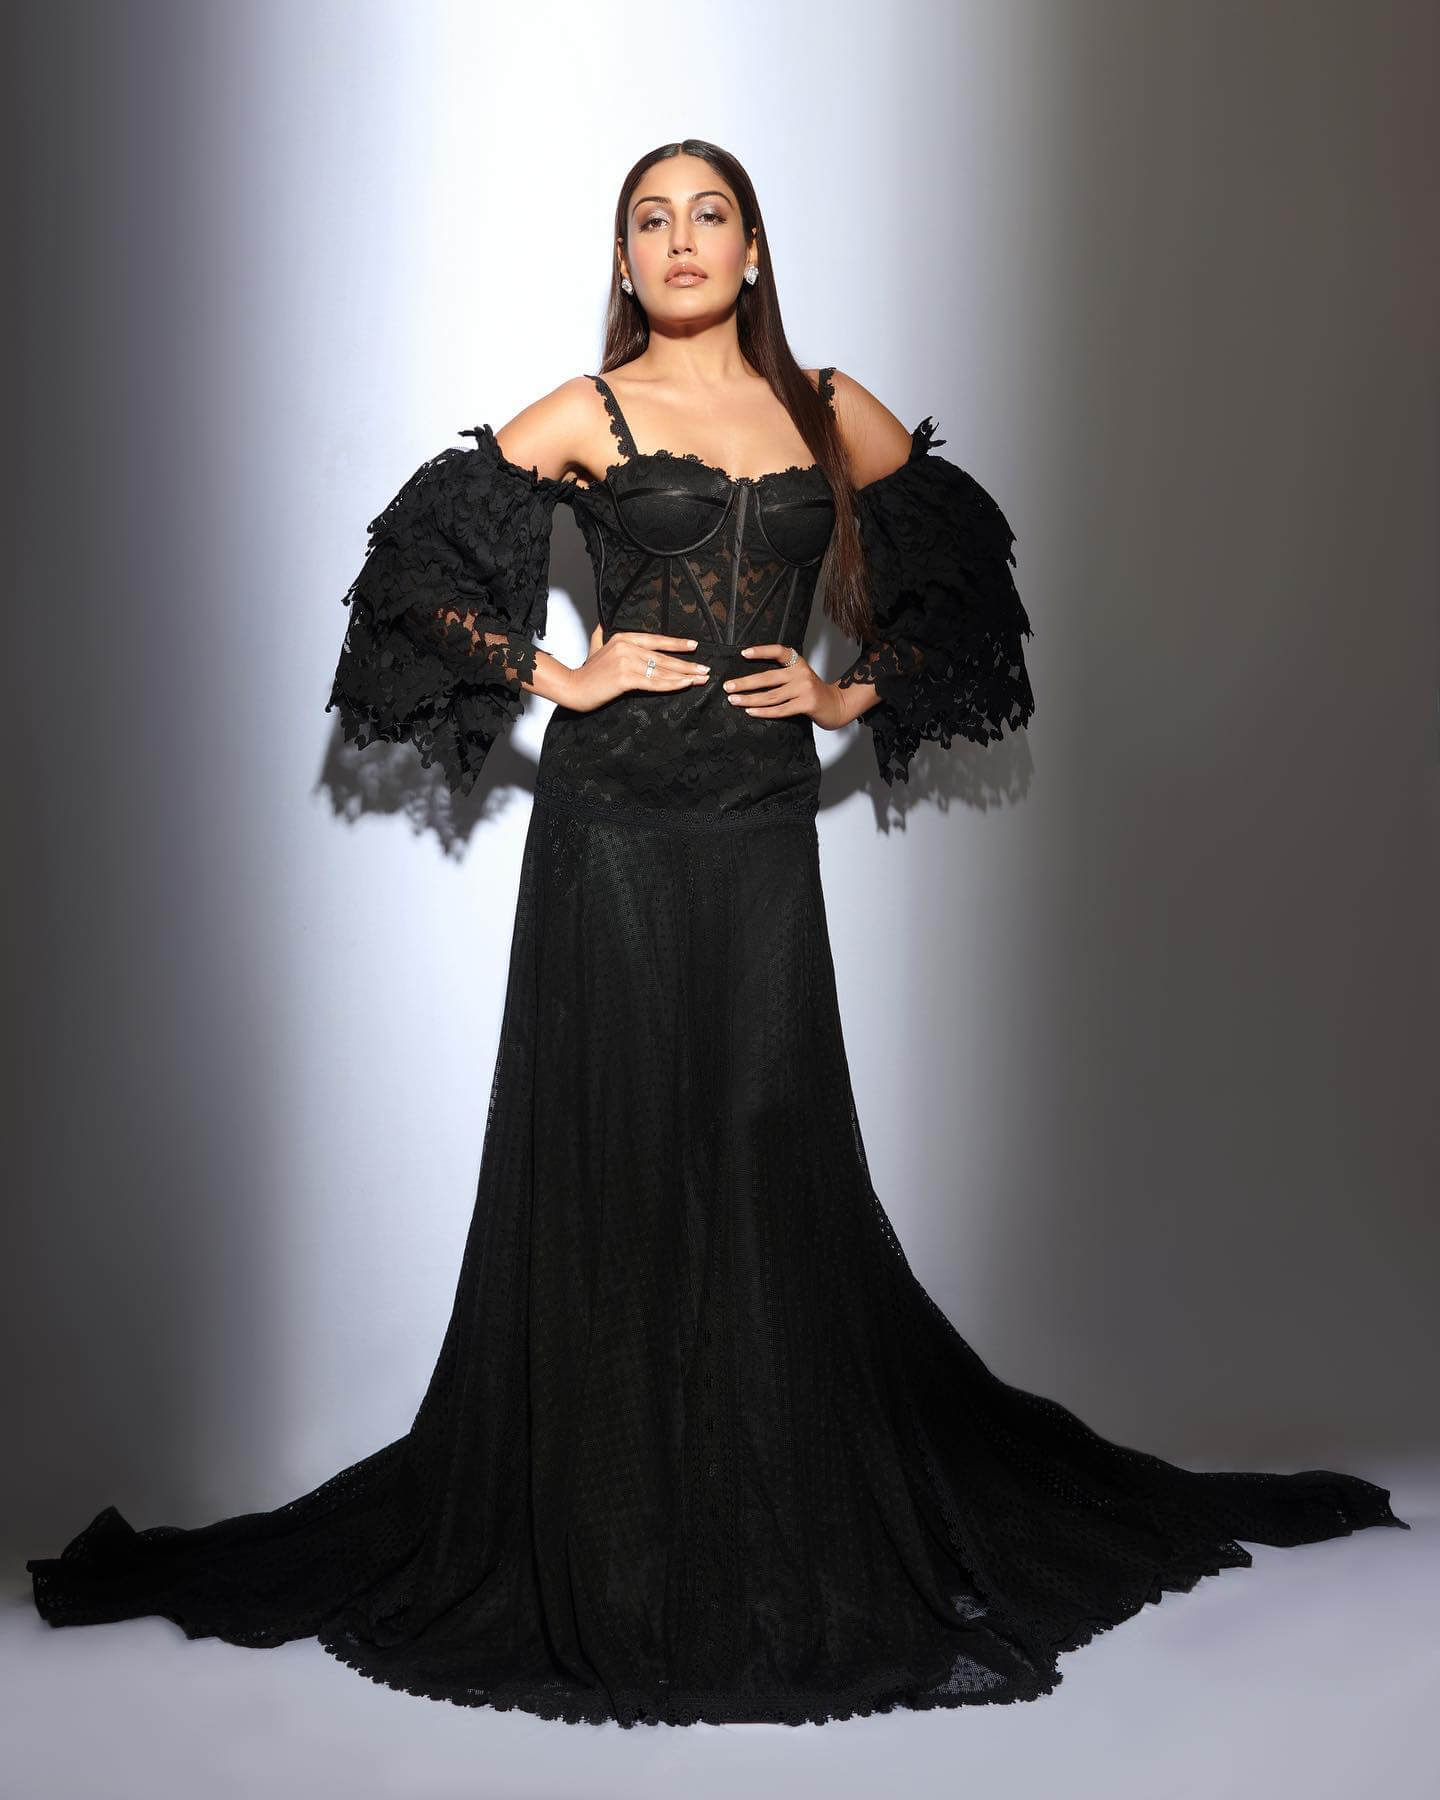 Dauntless Surbhi Chandna Gothic Theme Look In Black Gown